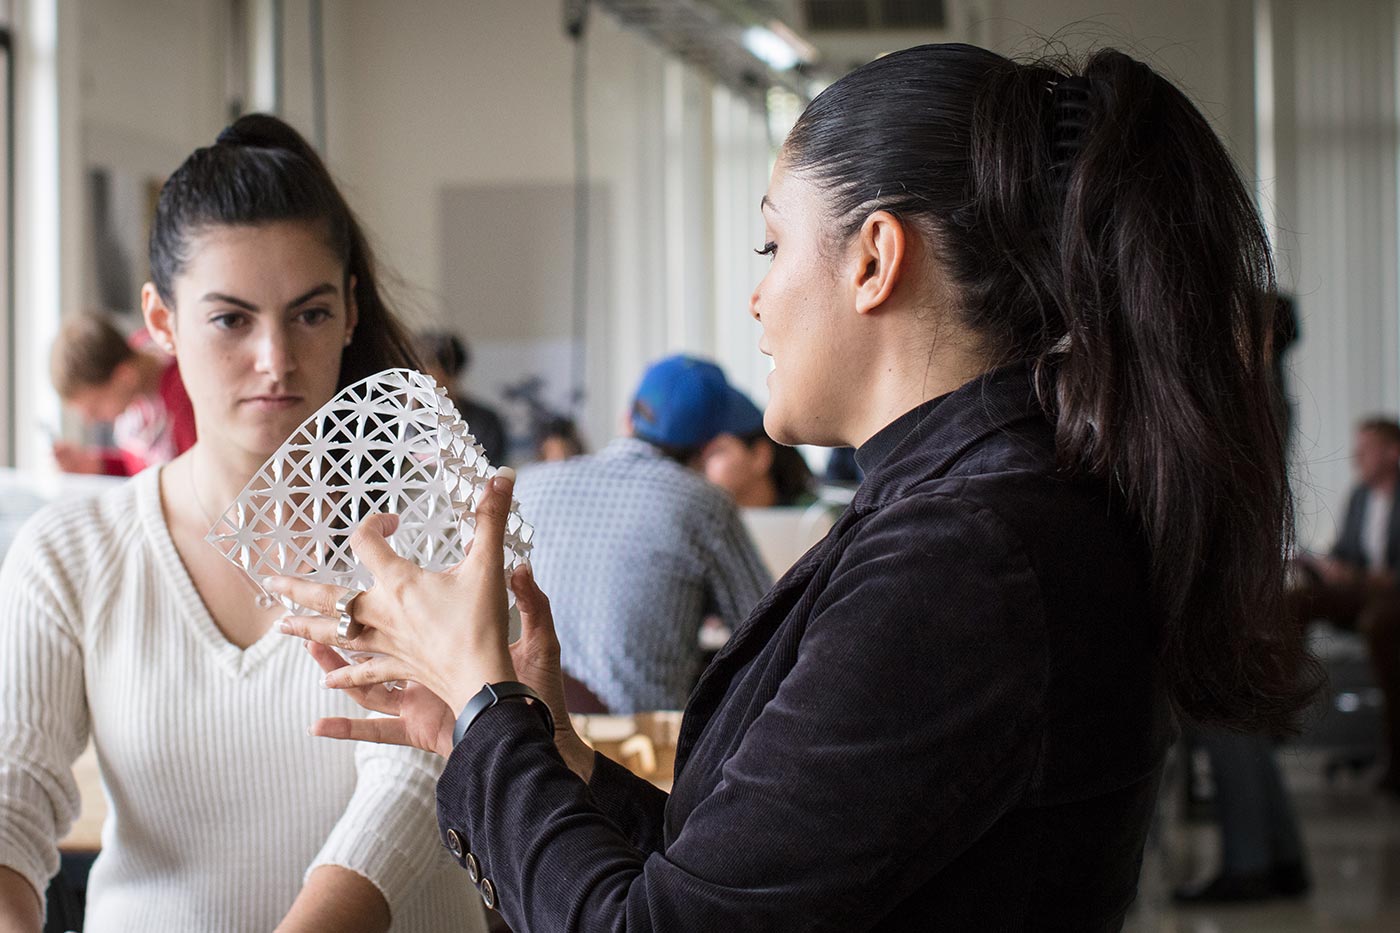 Mona Ghandi teaching an architecture design class at Washington State University